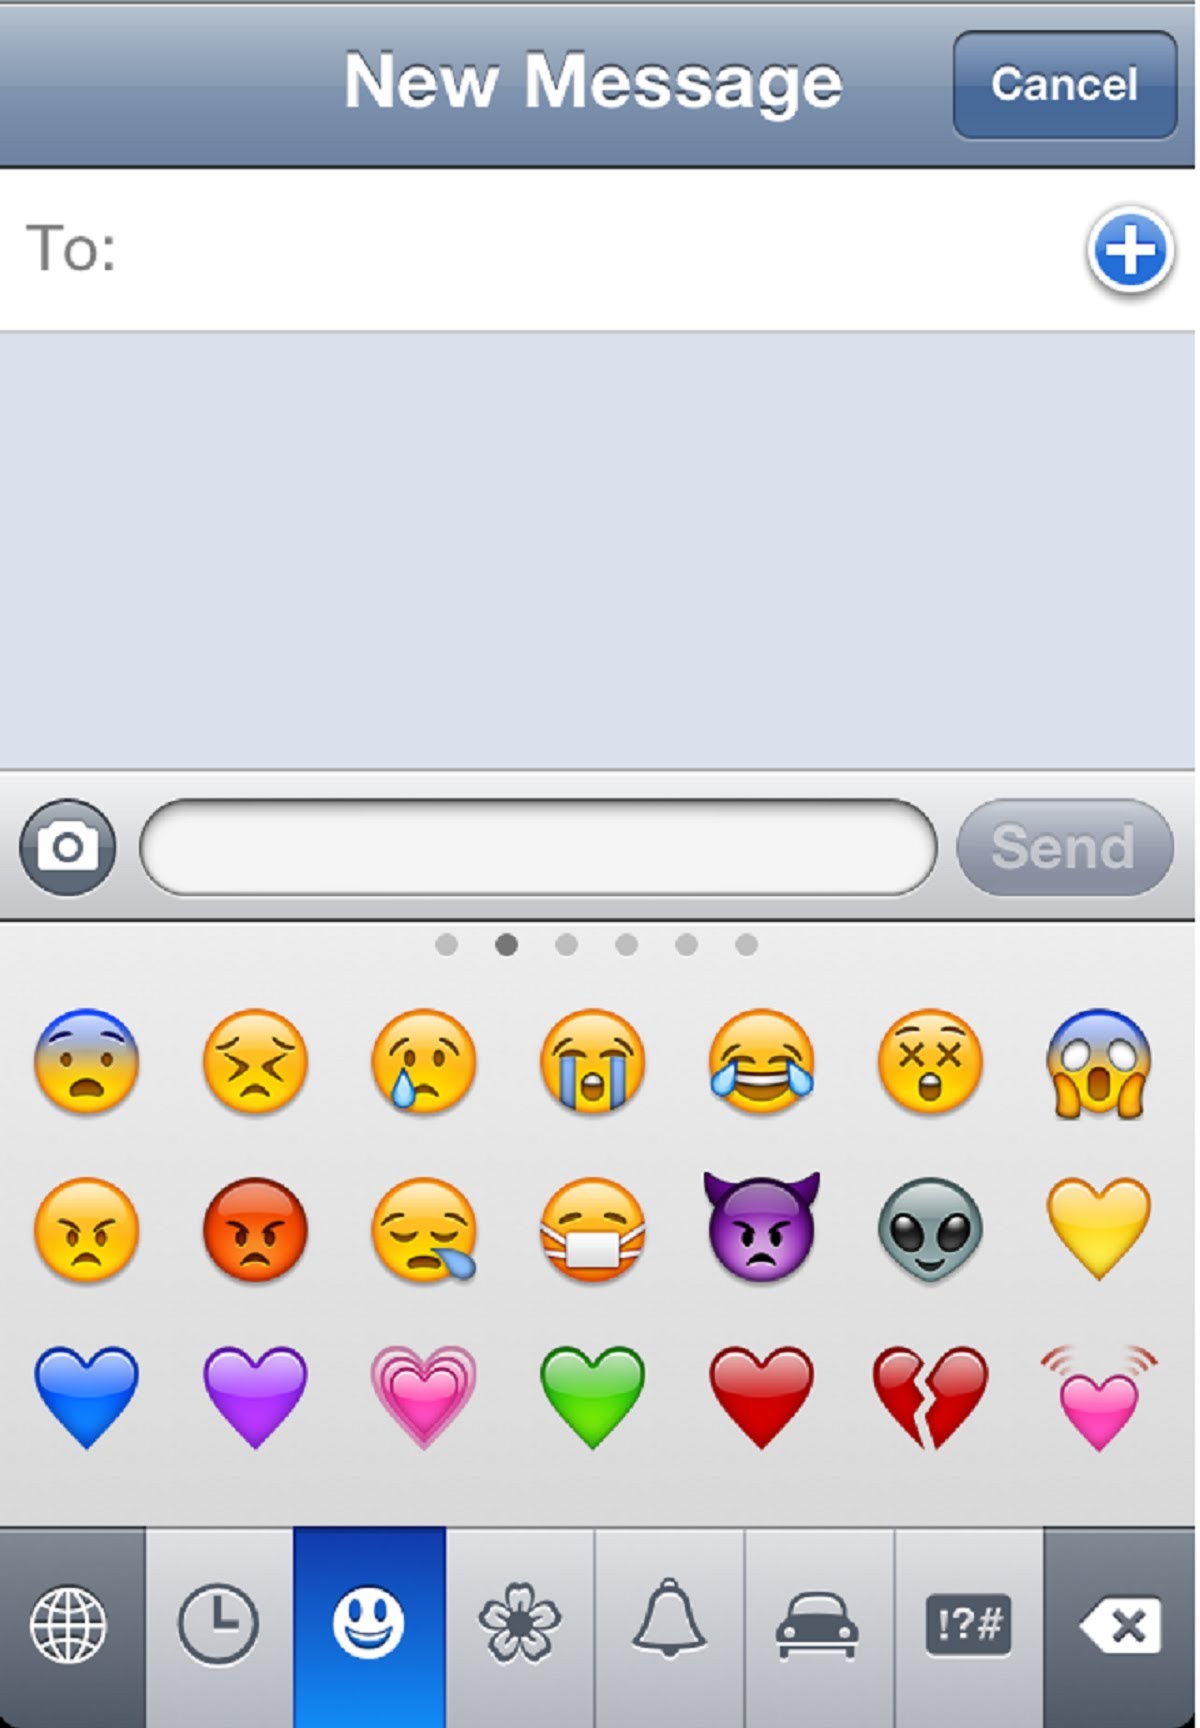 How to Add Emoji Keyboard in Your iPhone